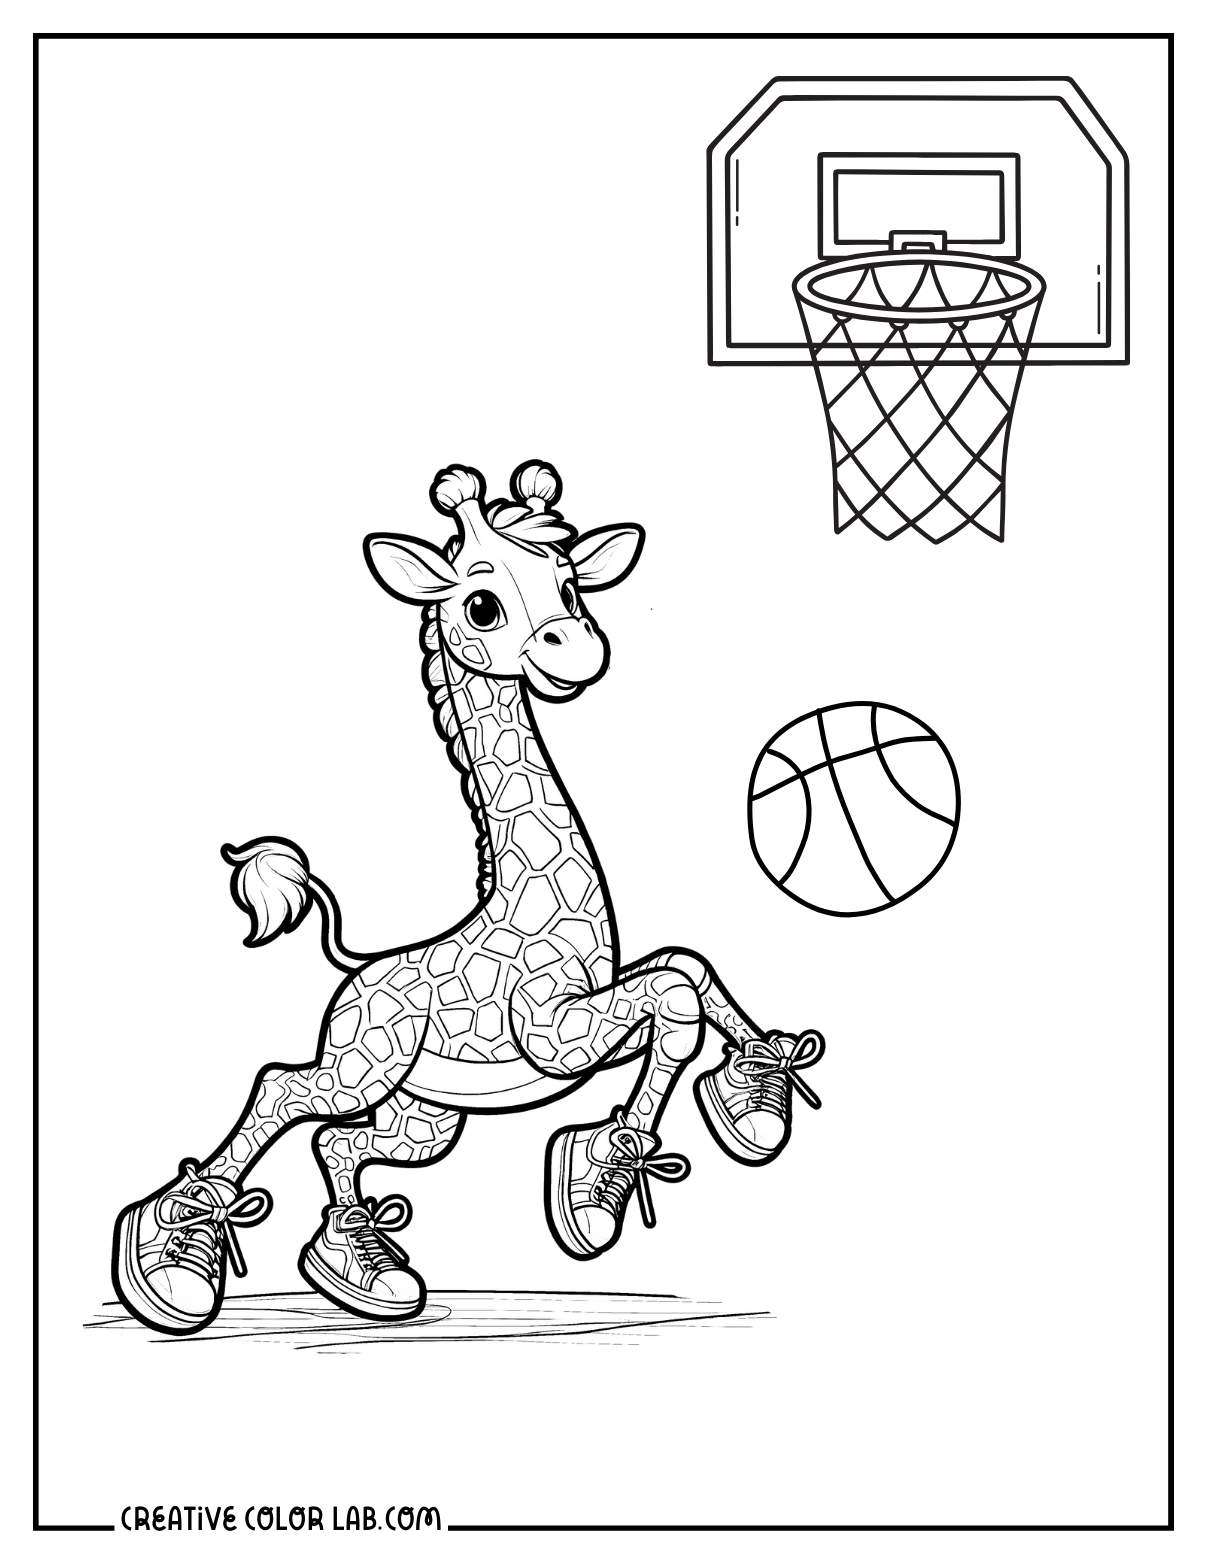 Giraffe playing basketball coloring sheet.